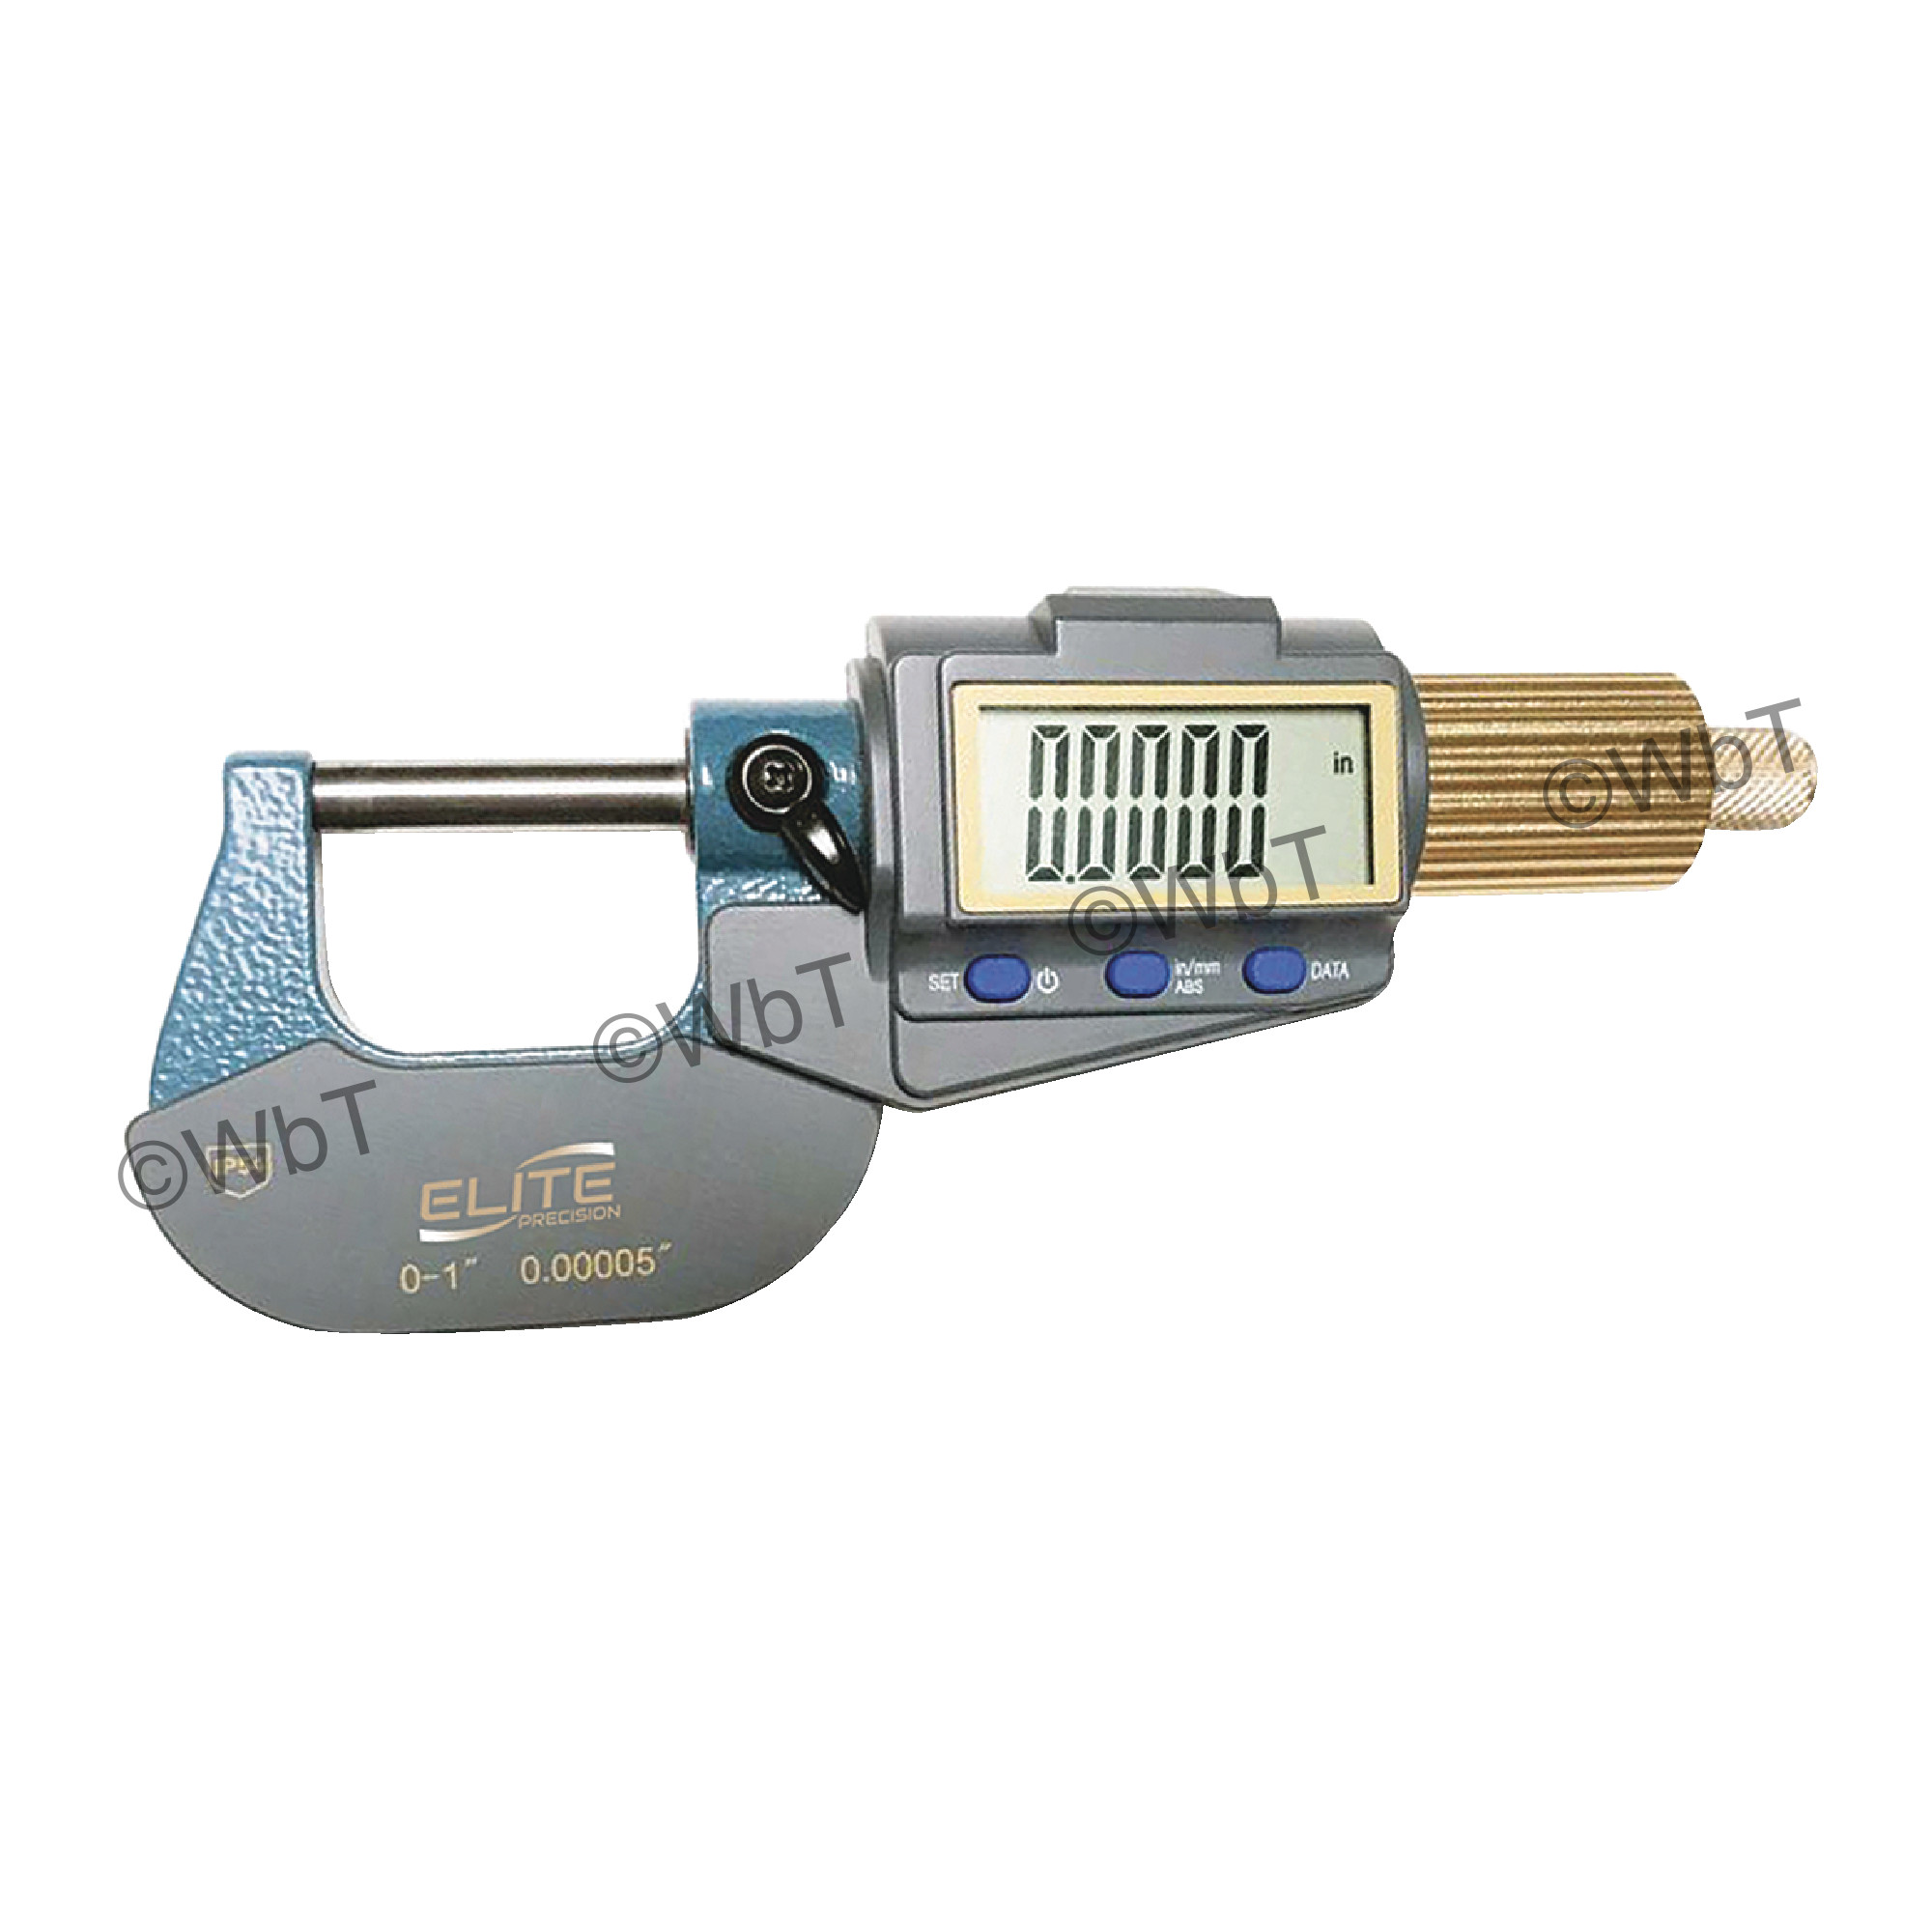 IP54 Electronic Micrometer